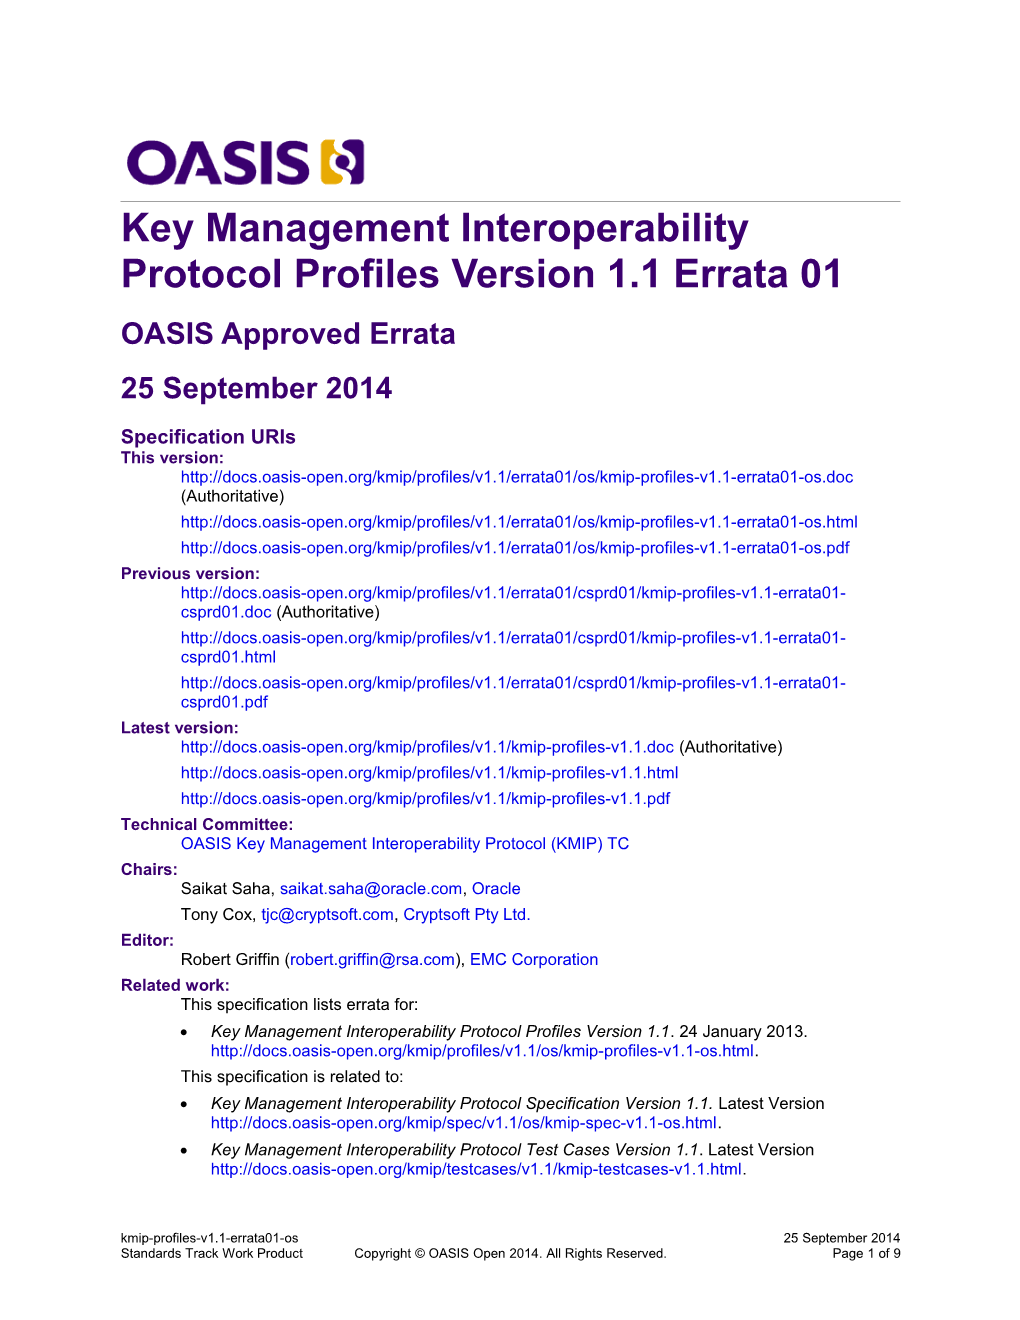 Key Management Interoperability Protocol Profiles Version 1.1 Errata 01